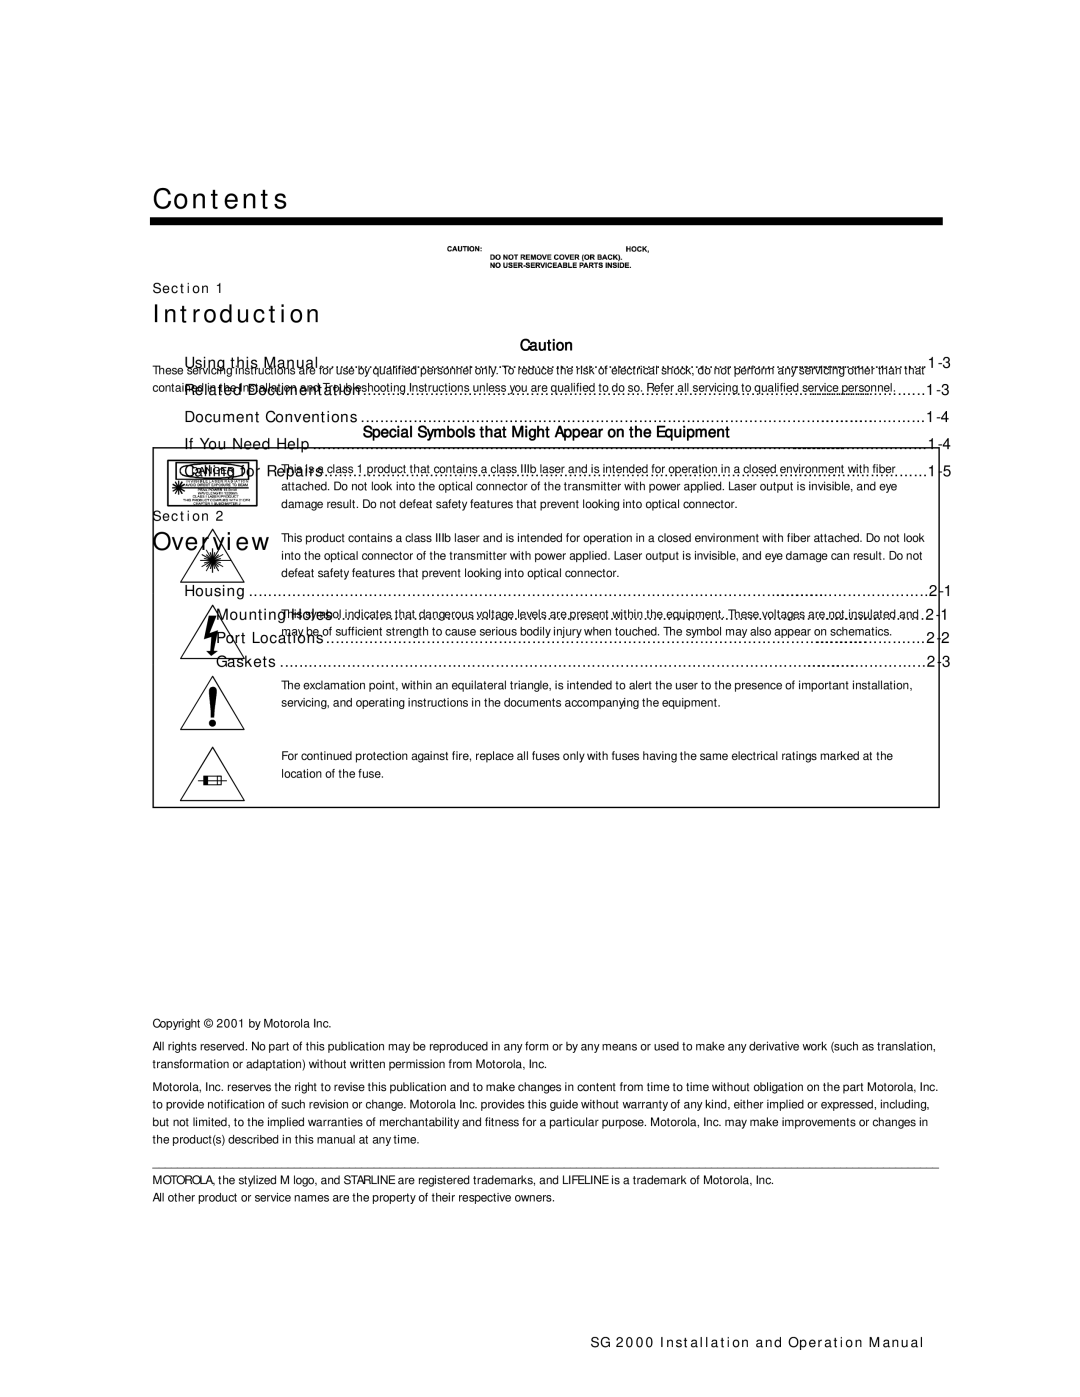 Motorola SG 2000 operation manual Contents 